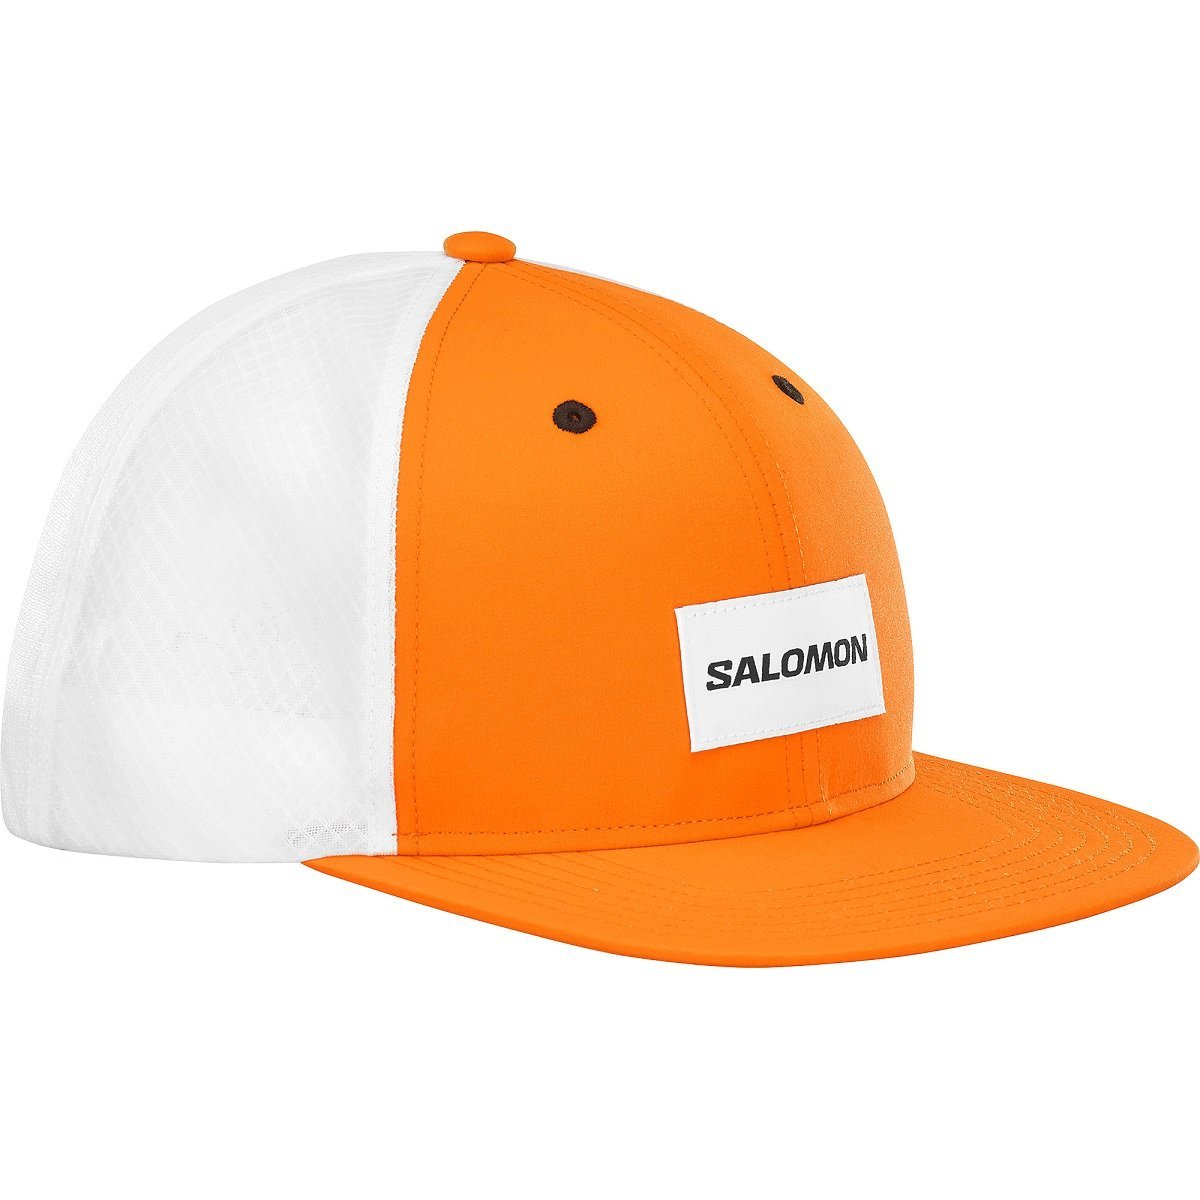 Salomon Trucker Flat Cap - oranžová/biela